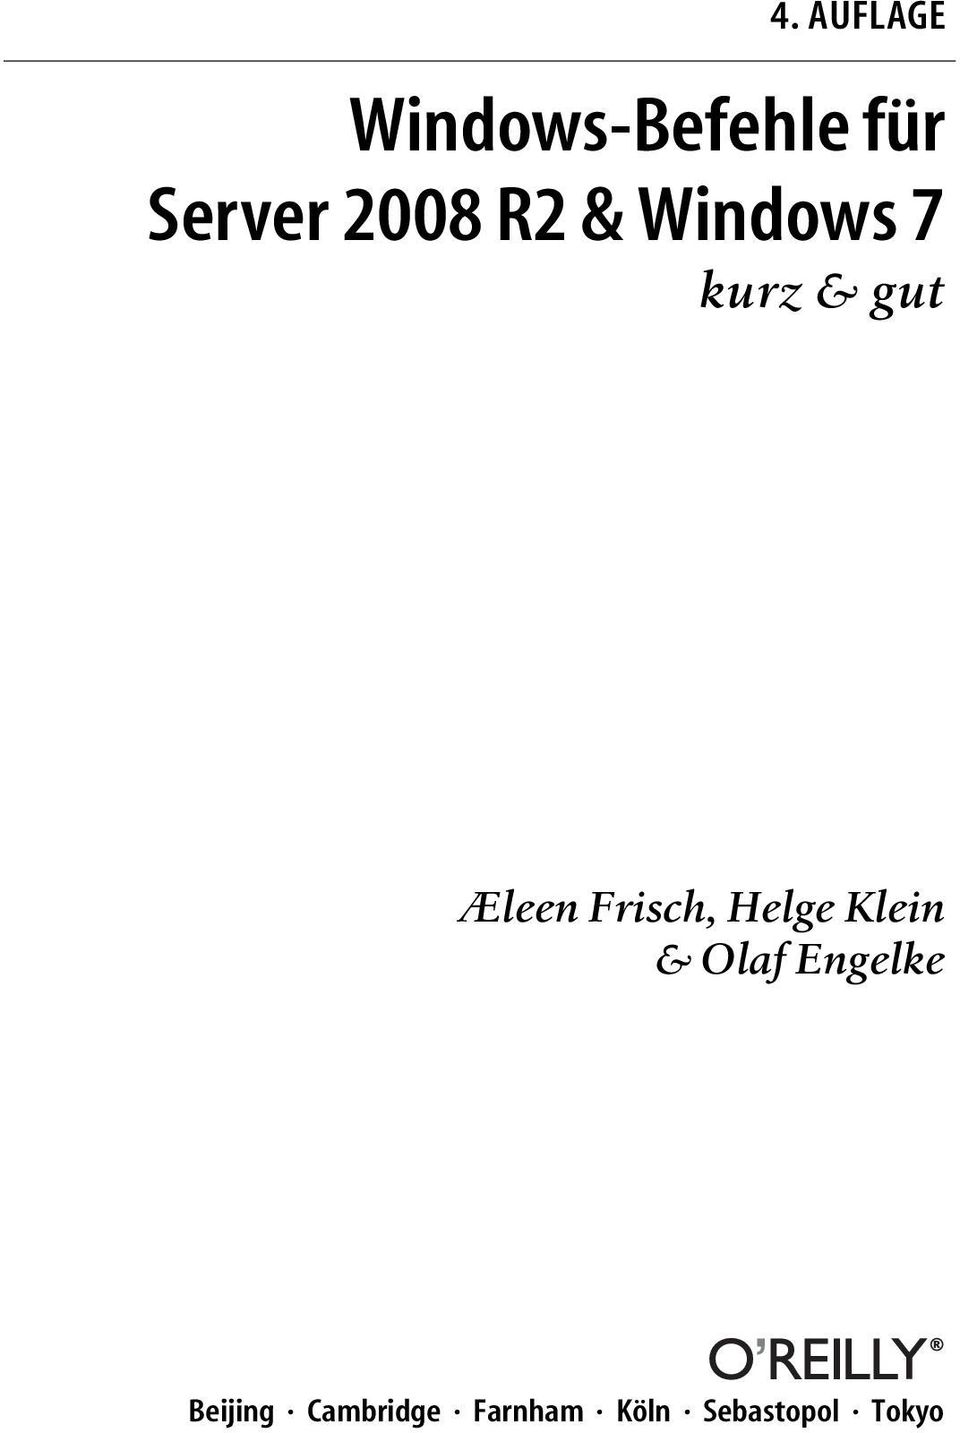 Frisch, Helge Klein & Olaf Engelke